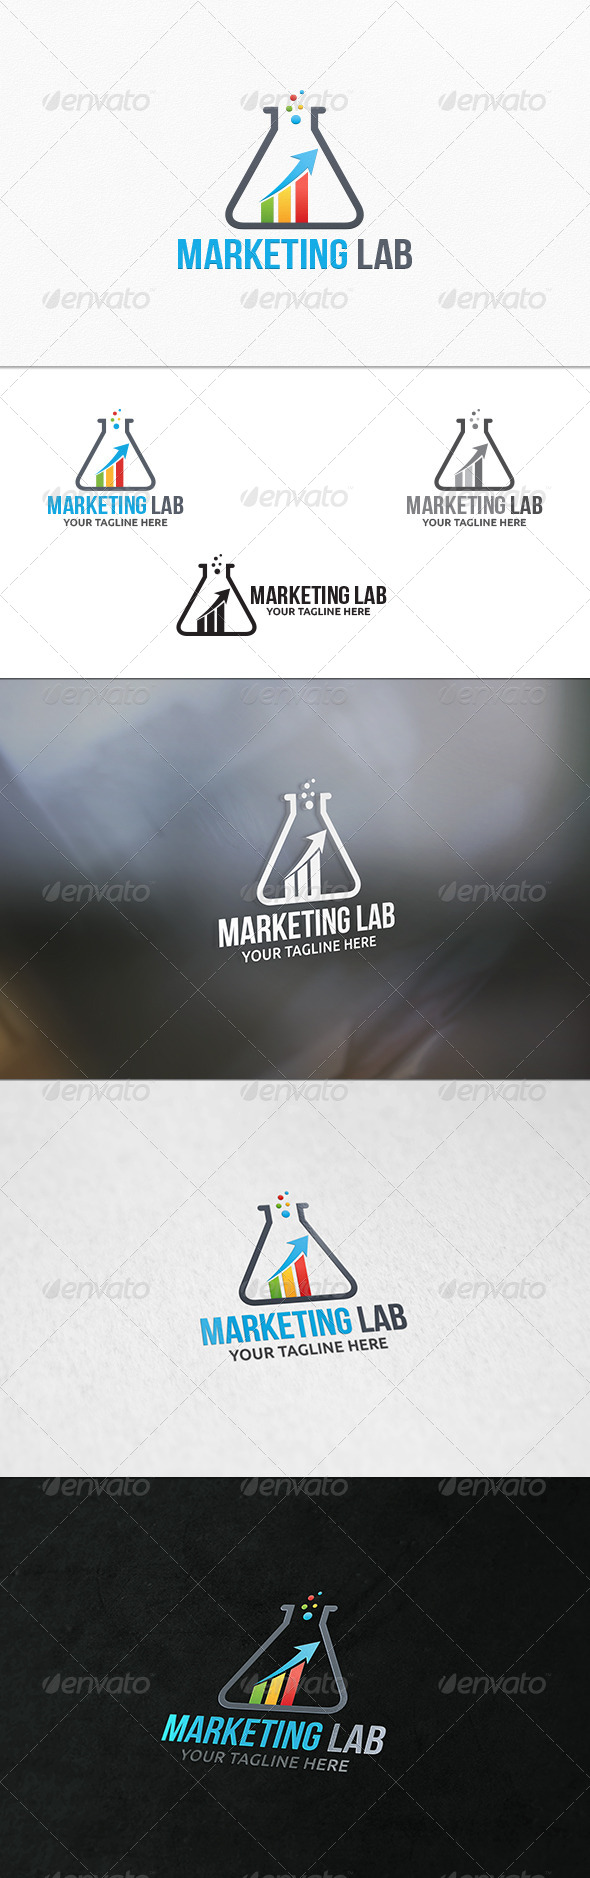 Marketing Lab - Logo Template